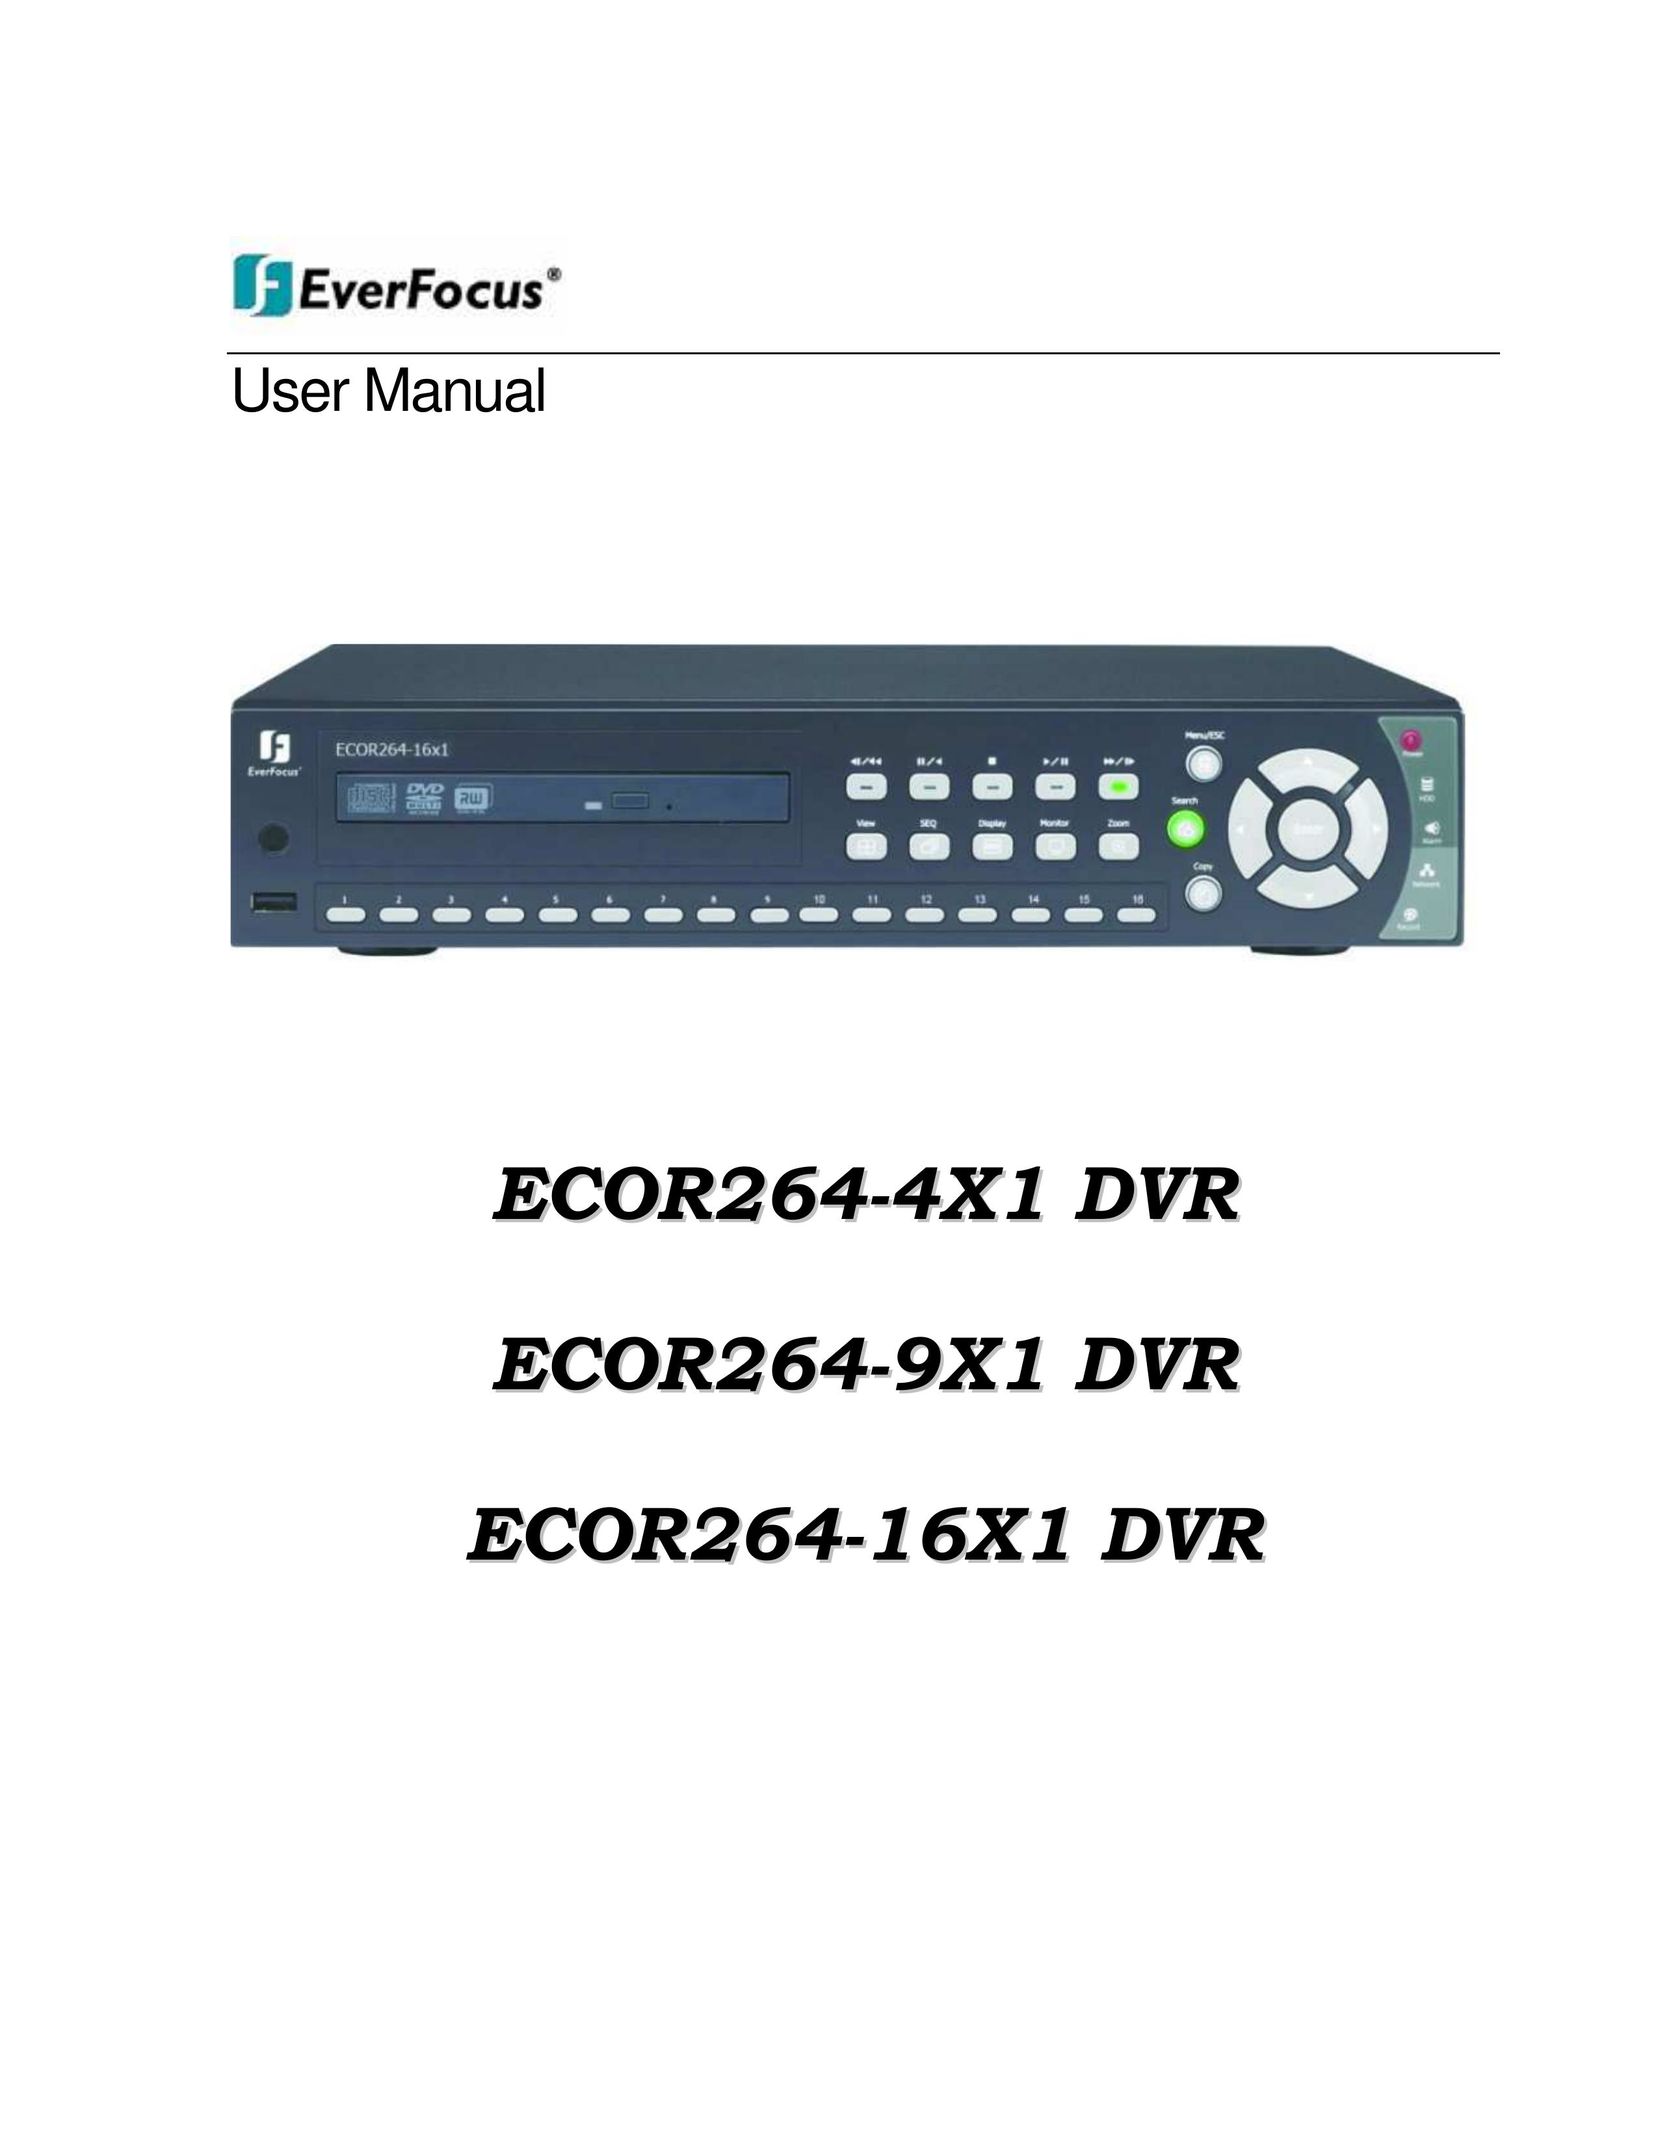 EverFocus ECOR264-4X1 DVR User Manual